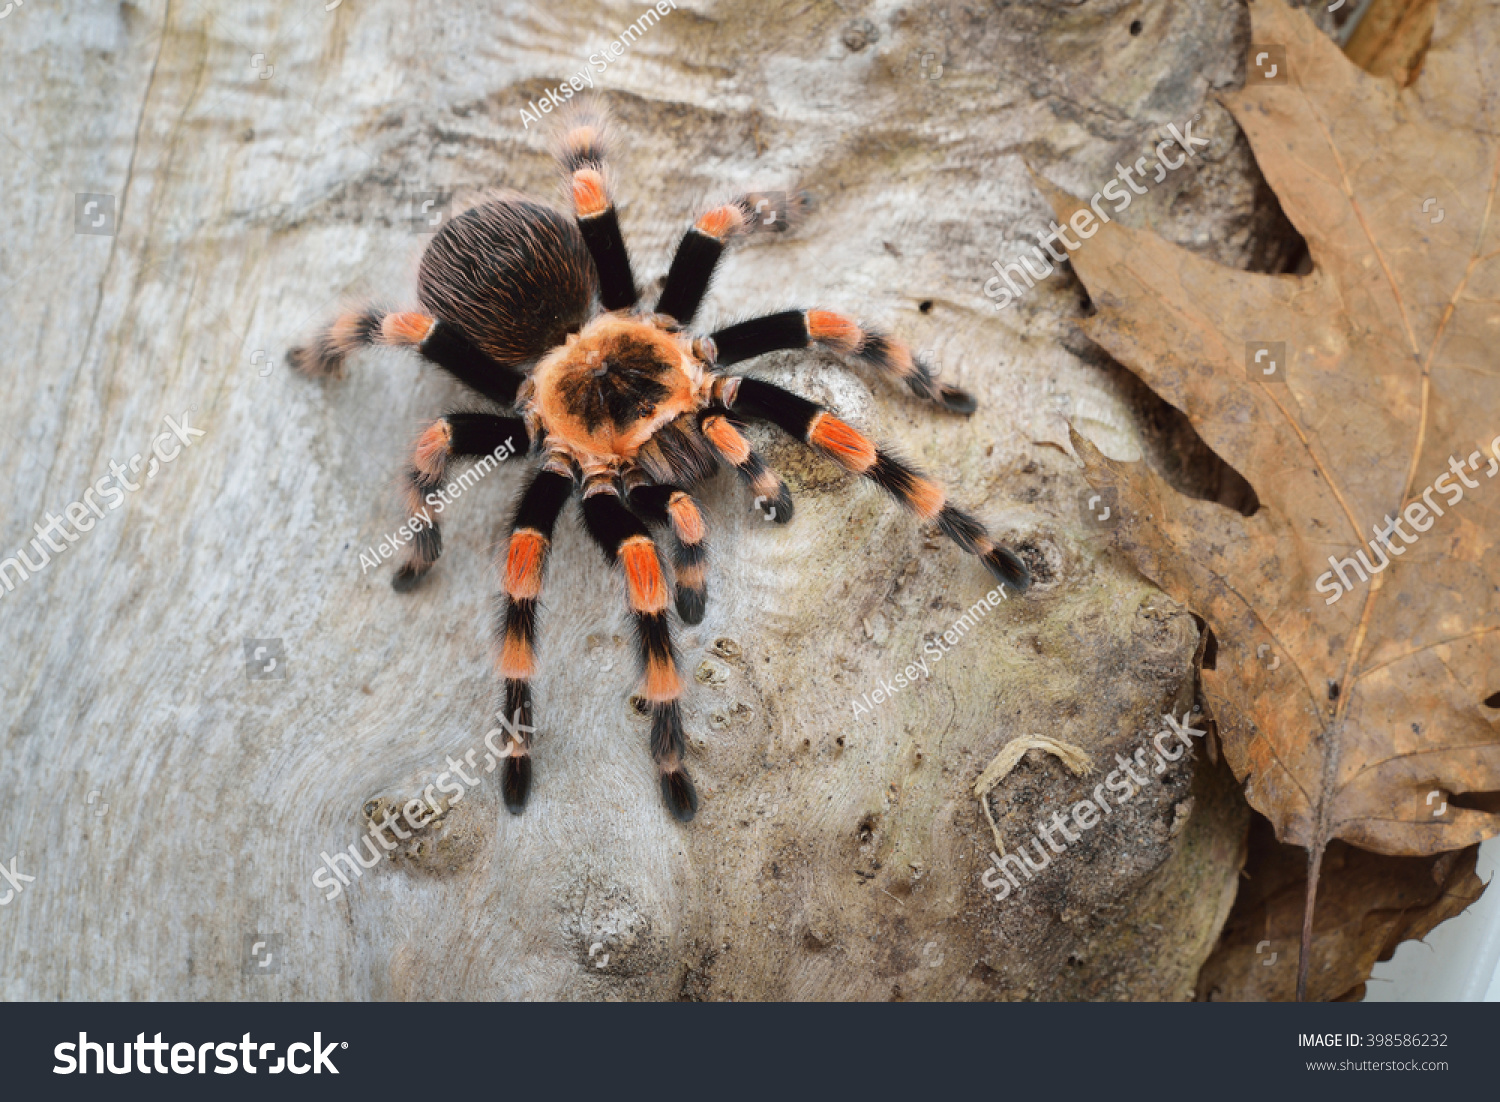 Birdeater tarantula spider Brachypelma smithi in natural forest environment. Bright orange colourful giant arachnid. #398586232